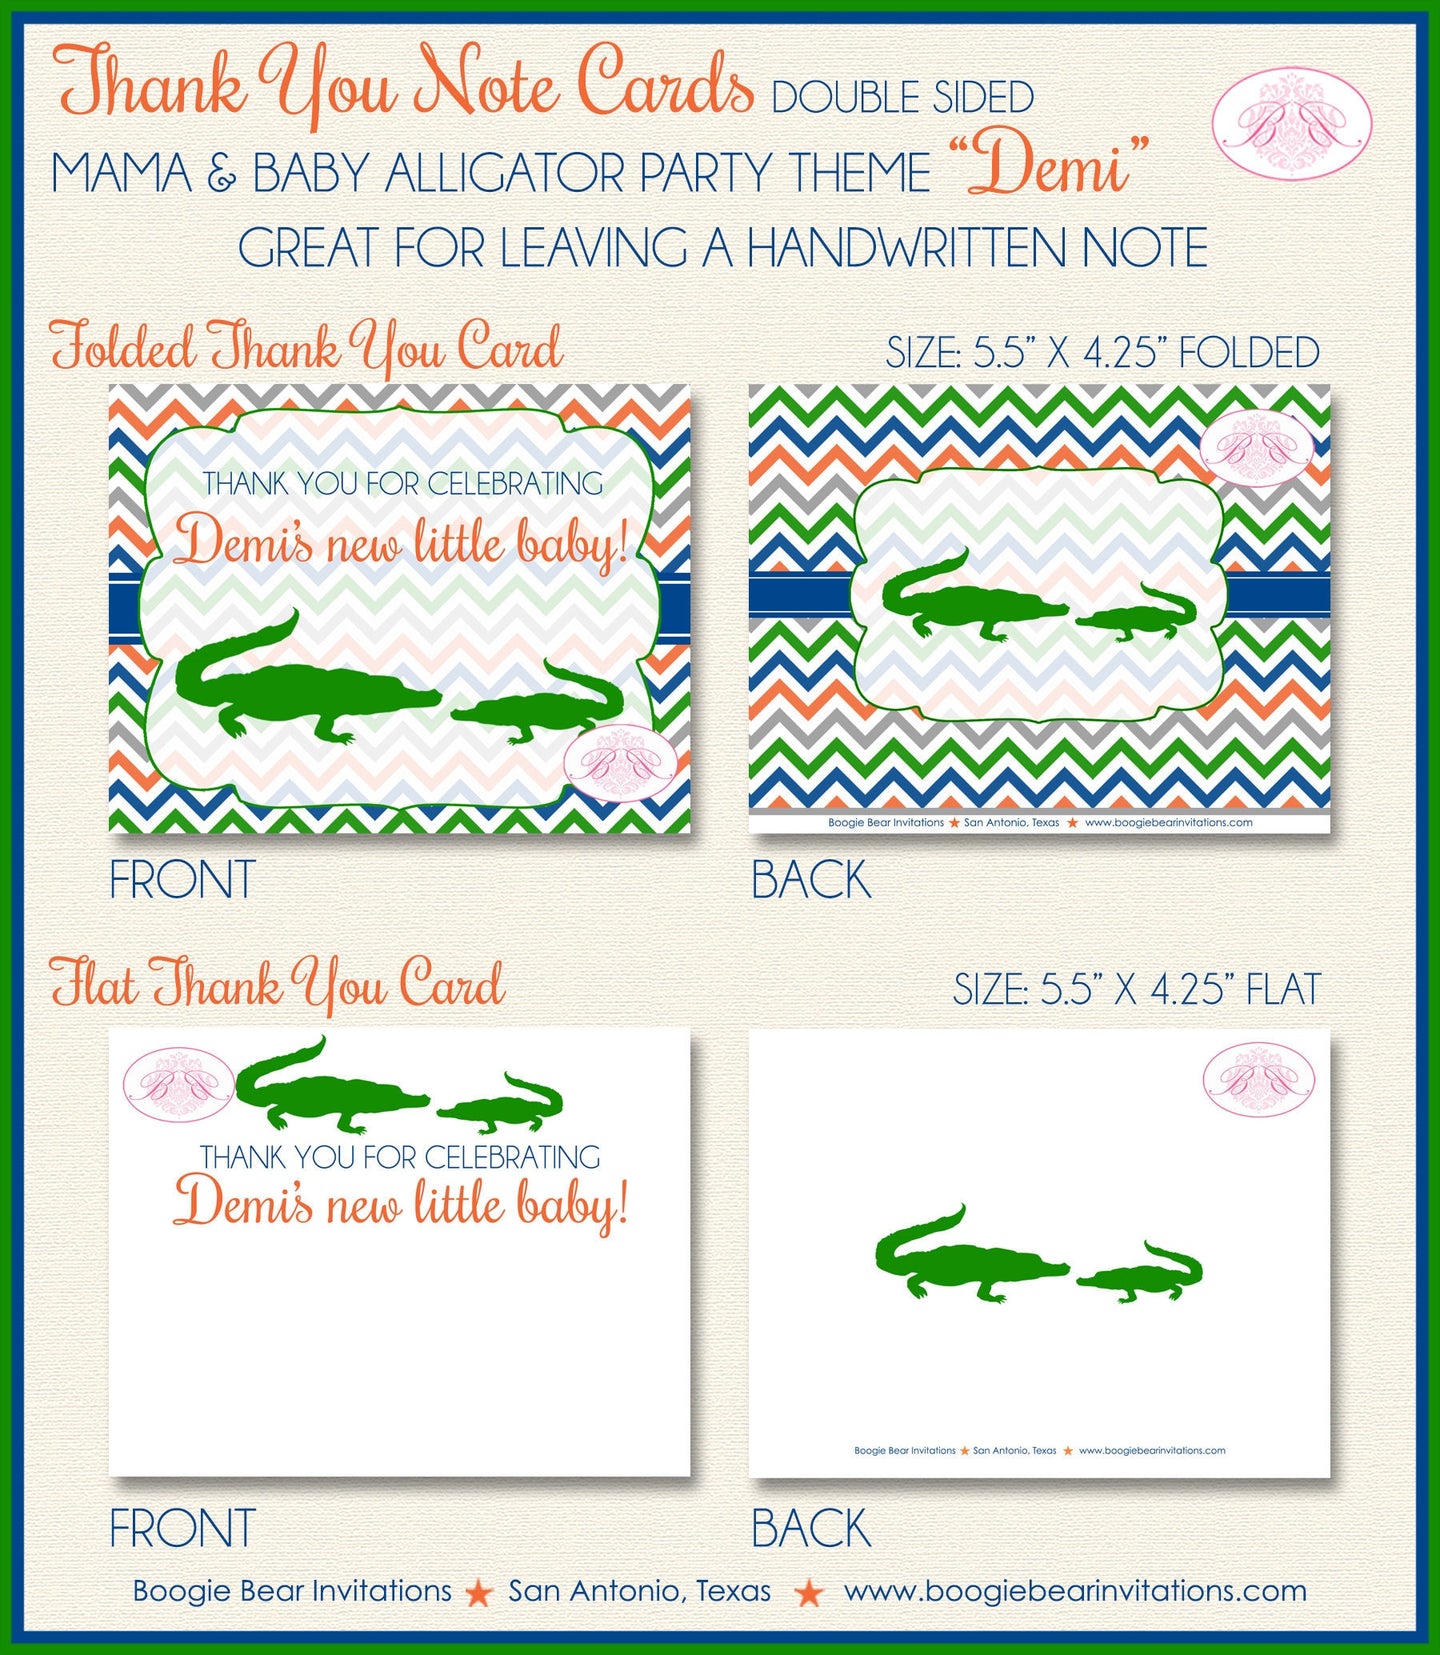 Alligator Crocodile Baby Shower Thank You Card Boy Girl Chevron Green Blue Orange Birthday Party Boogie Bear Invitations Demi Theme Printed